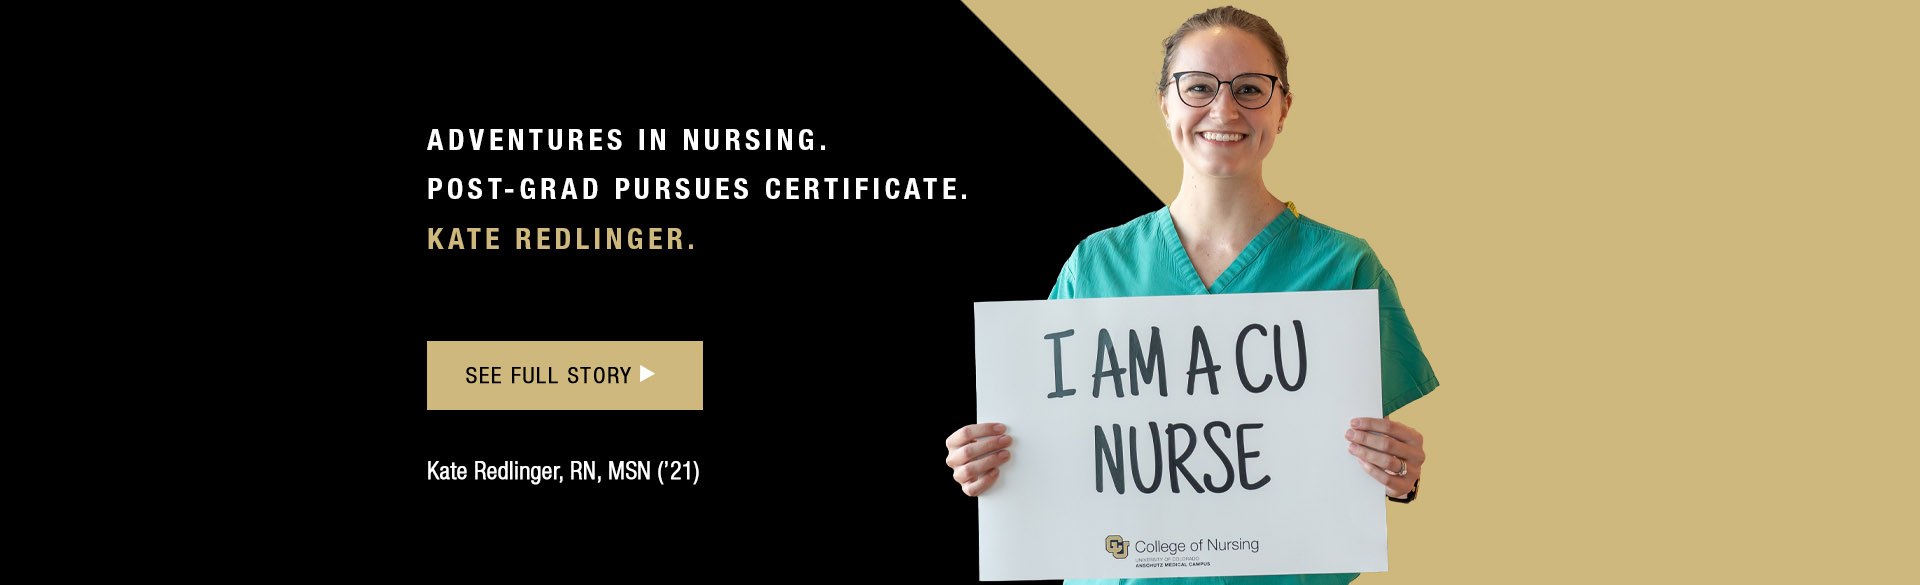 CU护理学院学生(校友)Kate Redlinger，注册护士，MSN '21